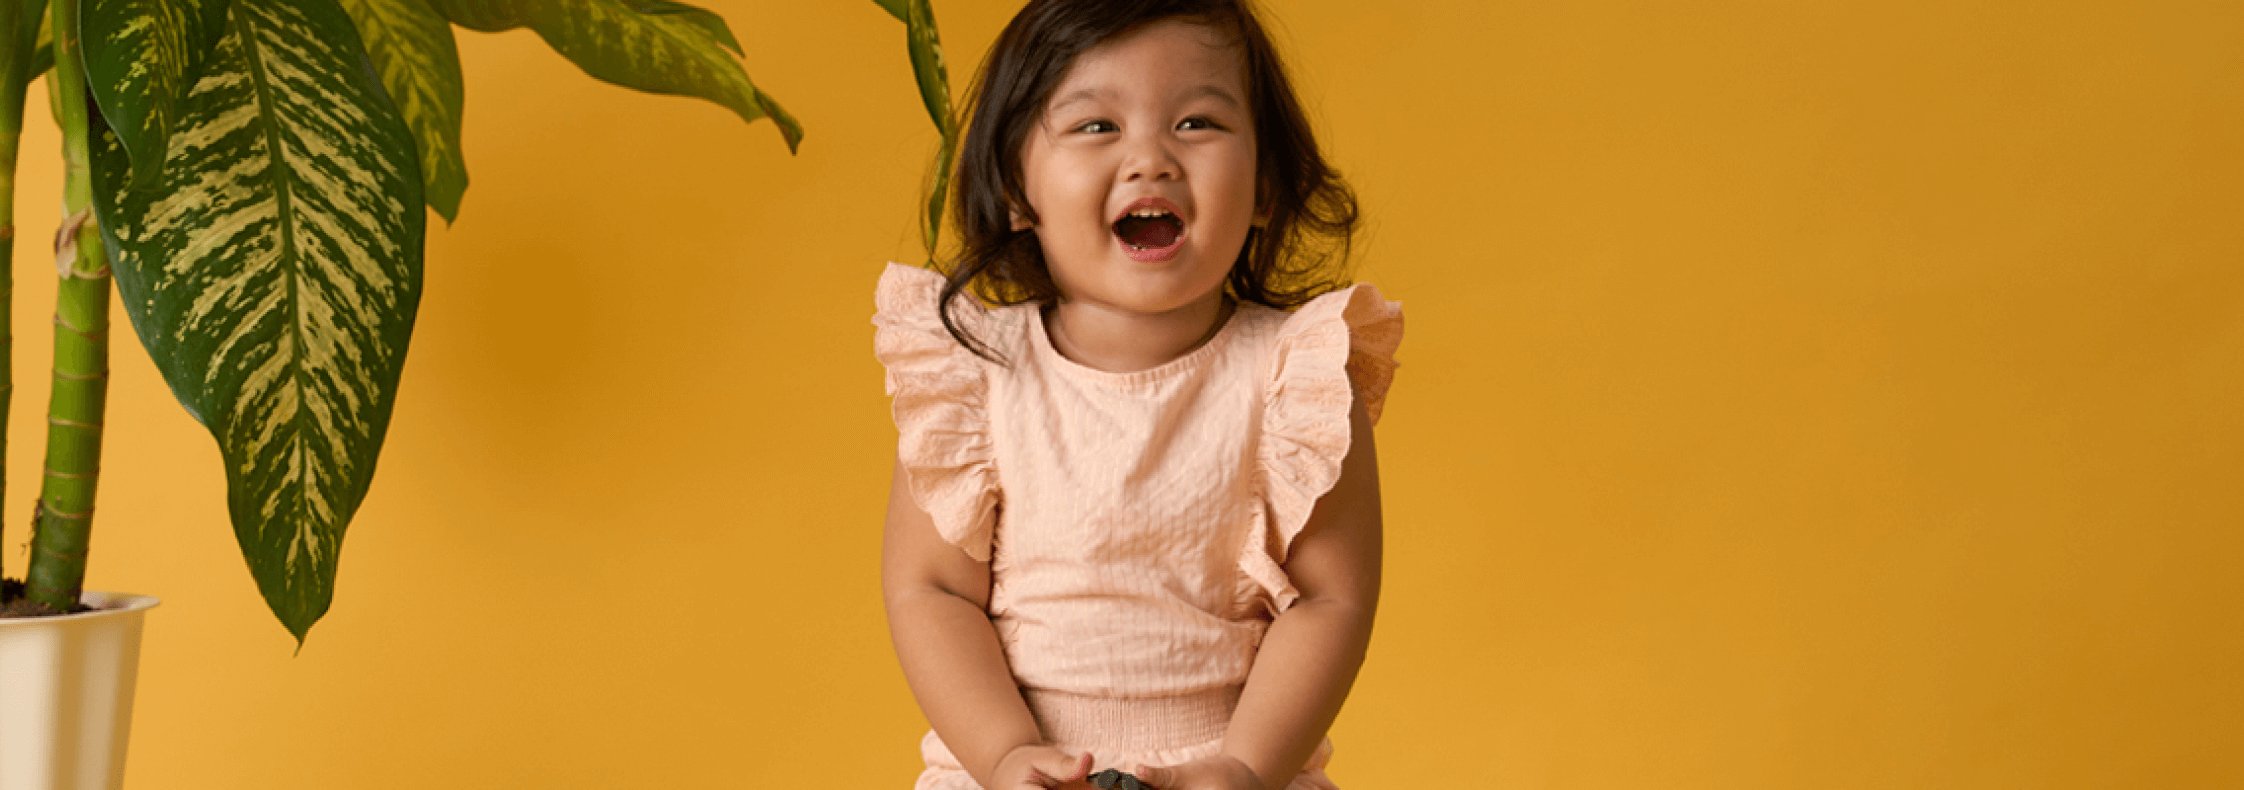 NEW BABY GIRLS | Number 1 kids & children's fashion store. Shop online atgingersnaps.com.ph